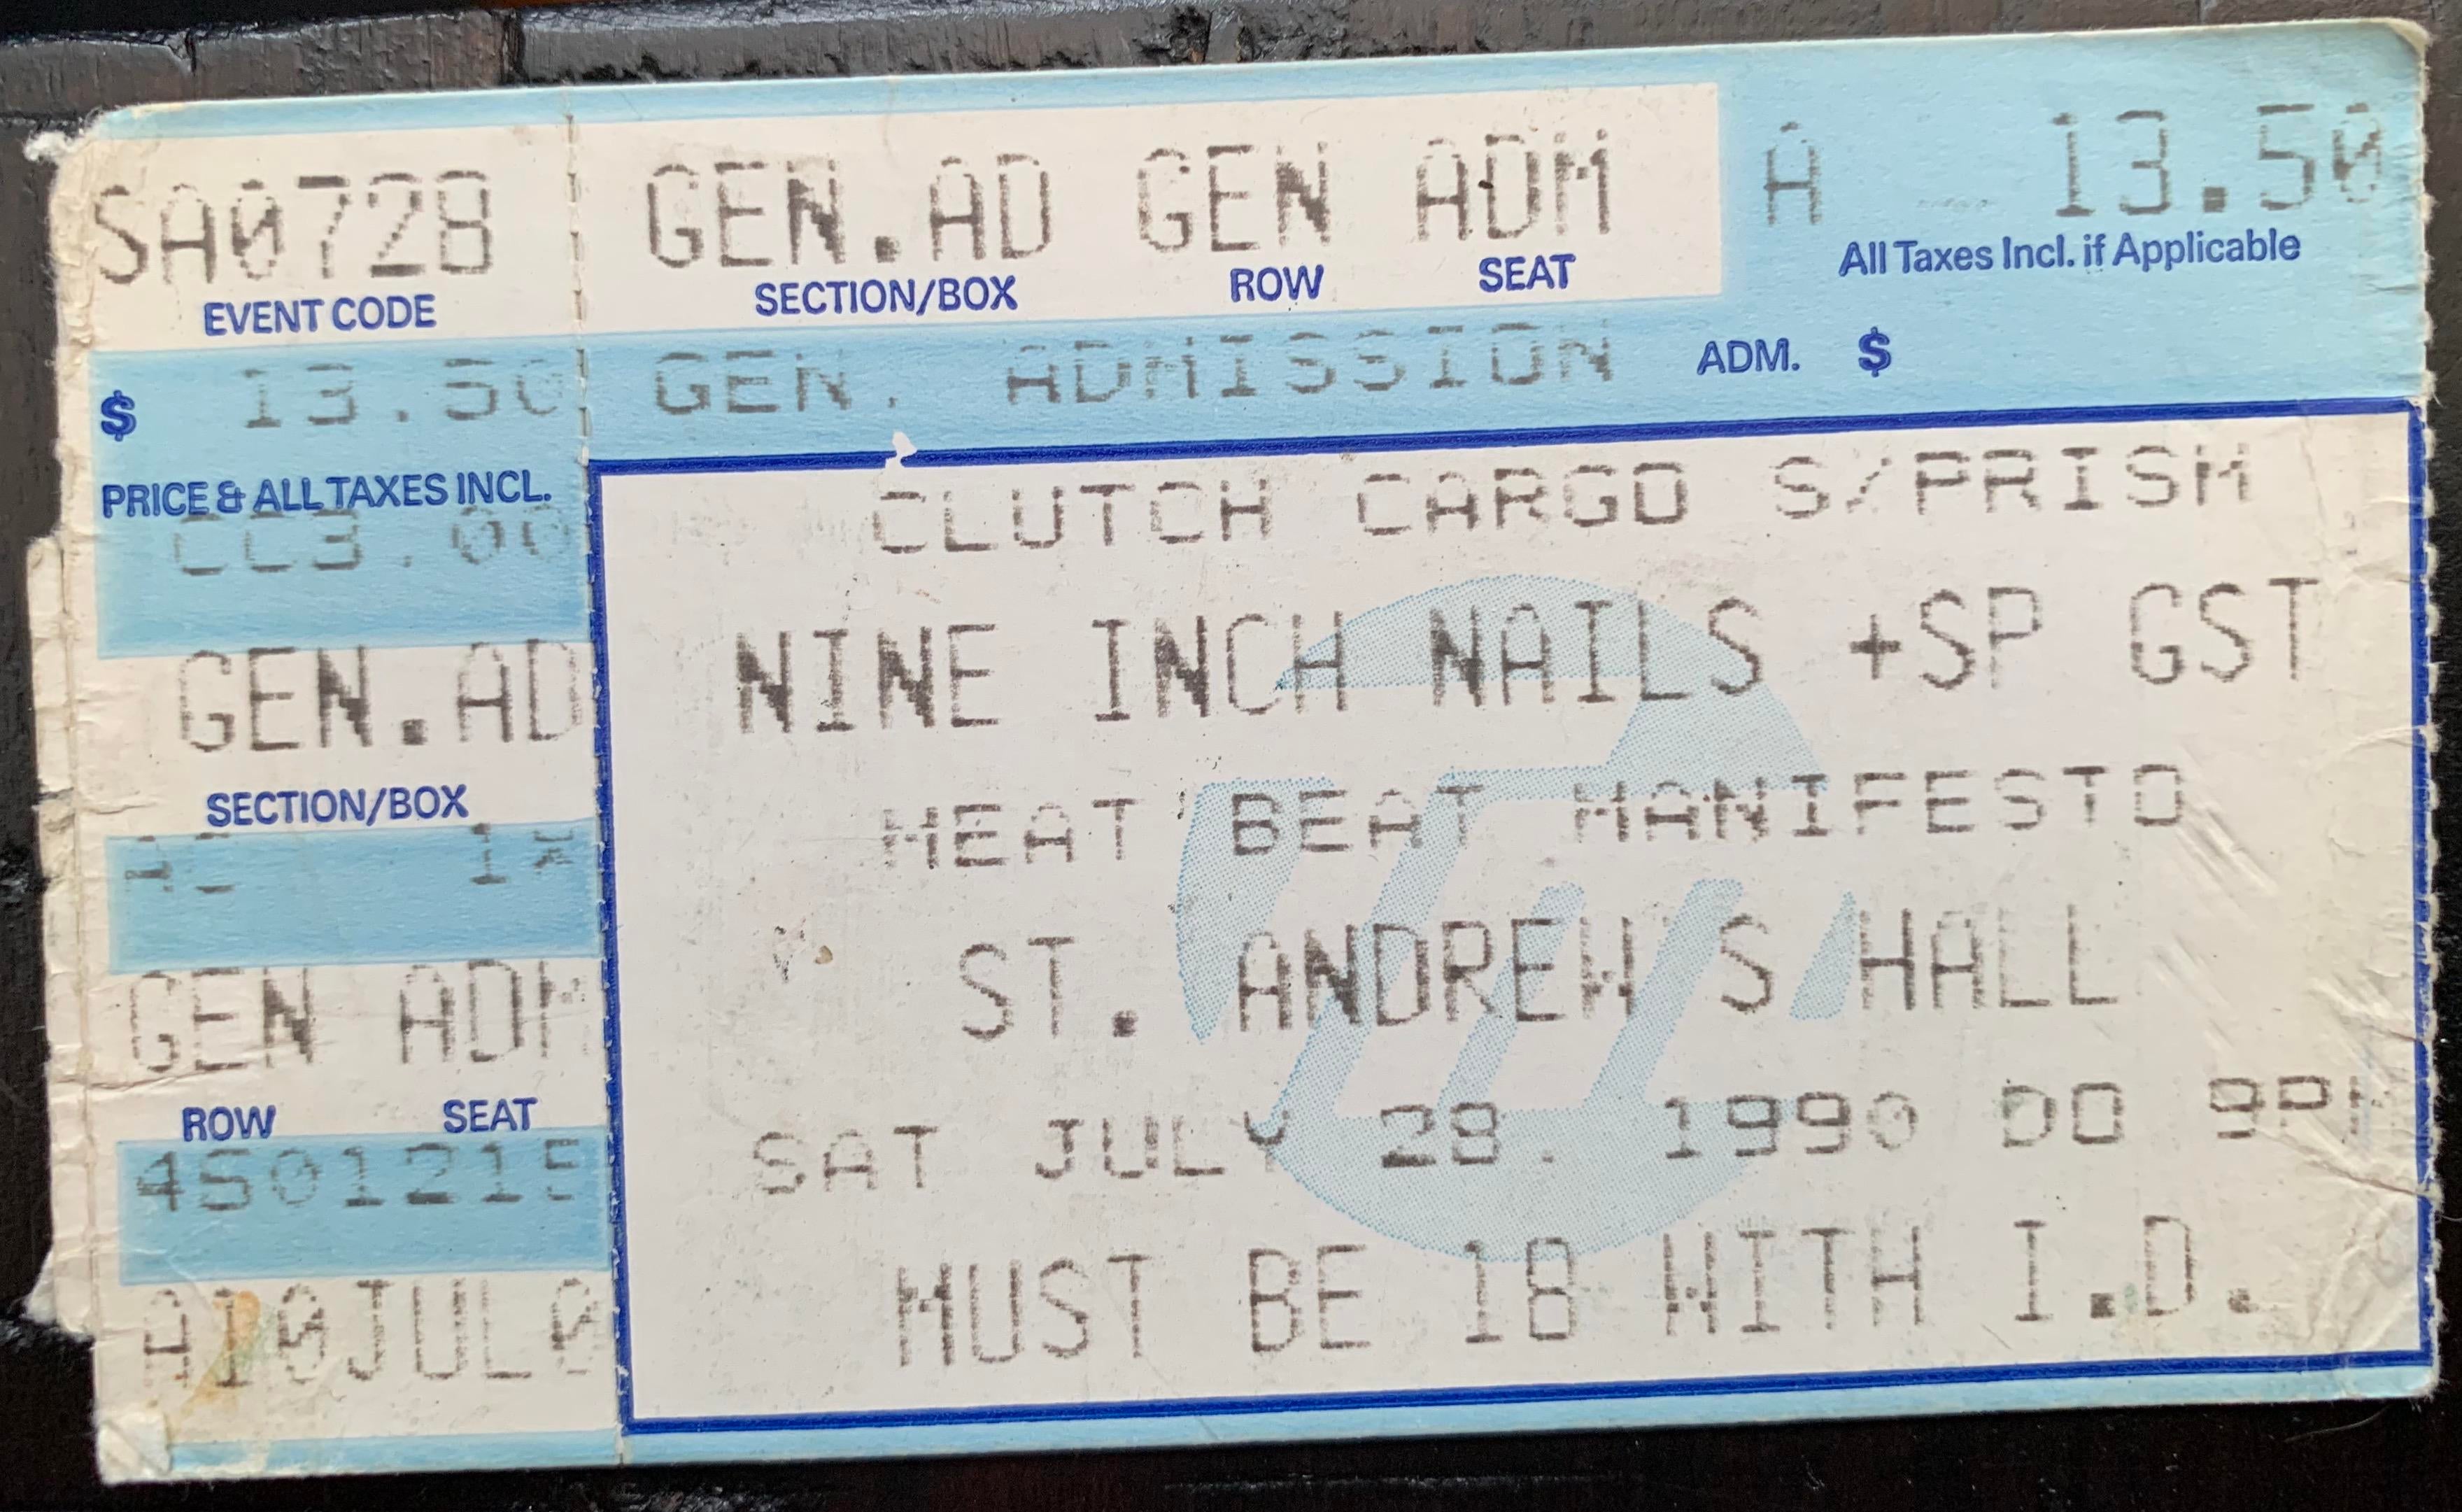 1990/07/28 Ticket